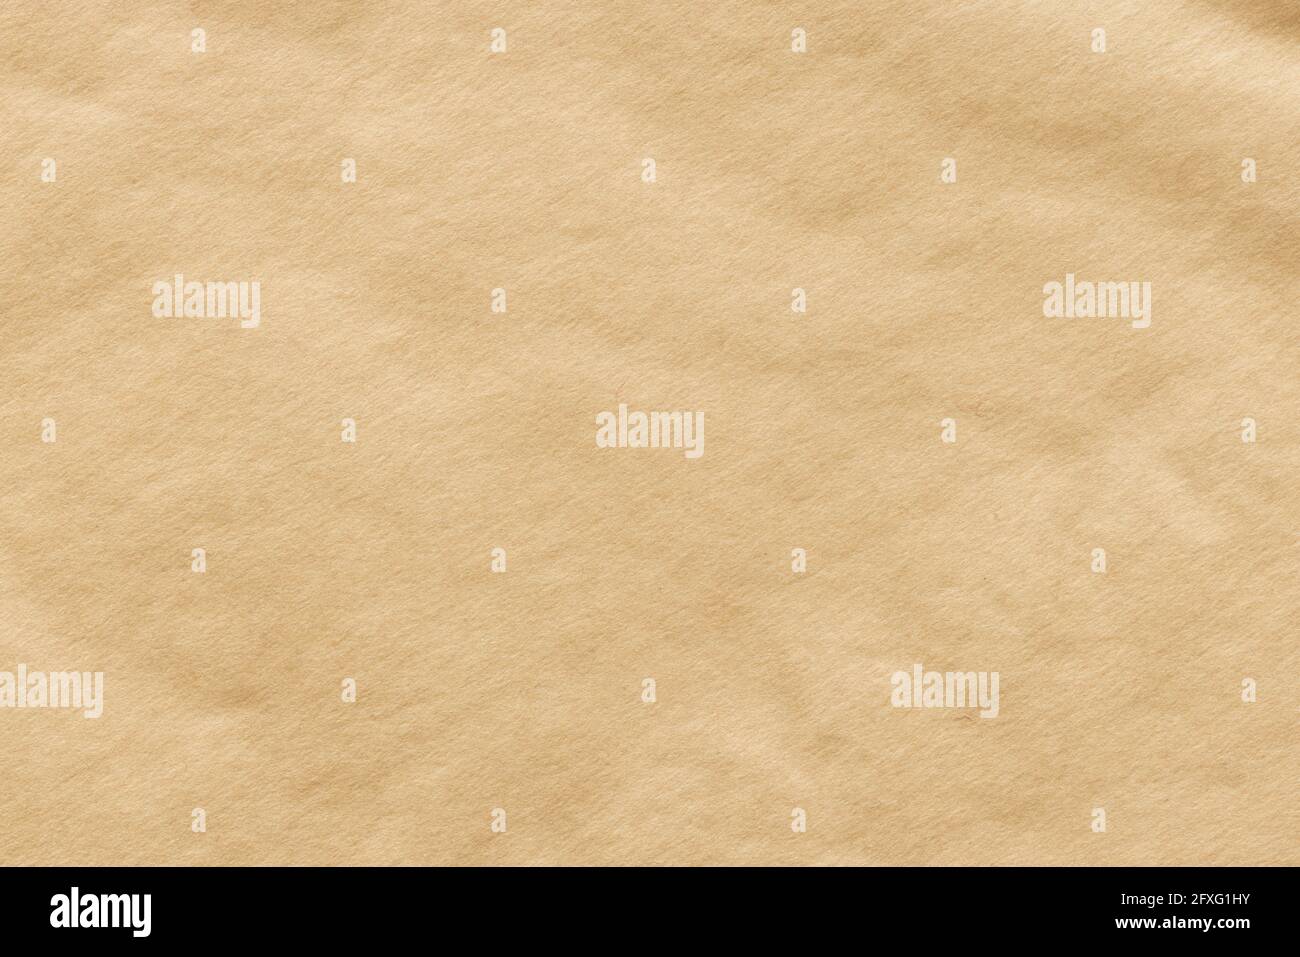 Padded manilla (manila) envelope, plain blank envelope full frame background, texture or pattern Stock Photo